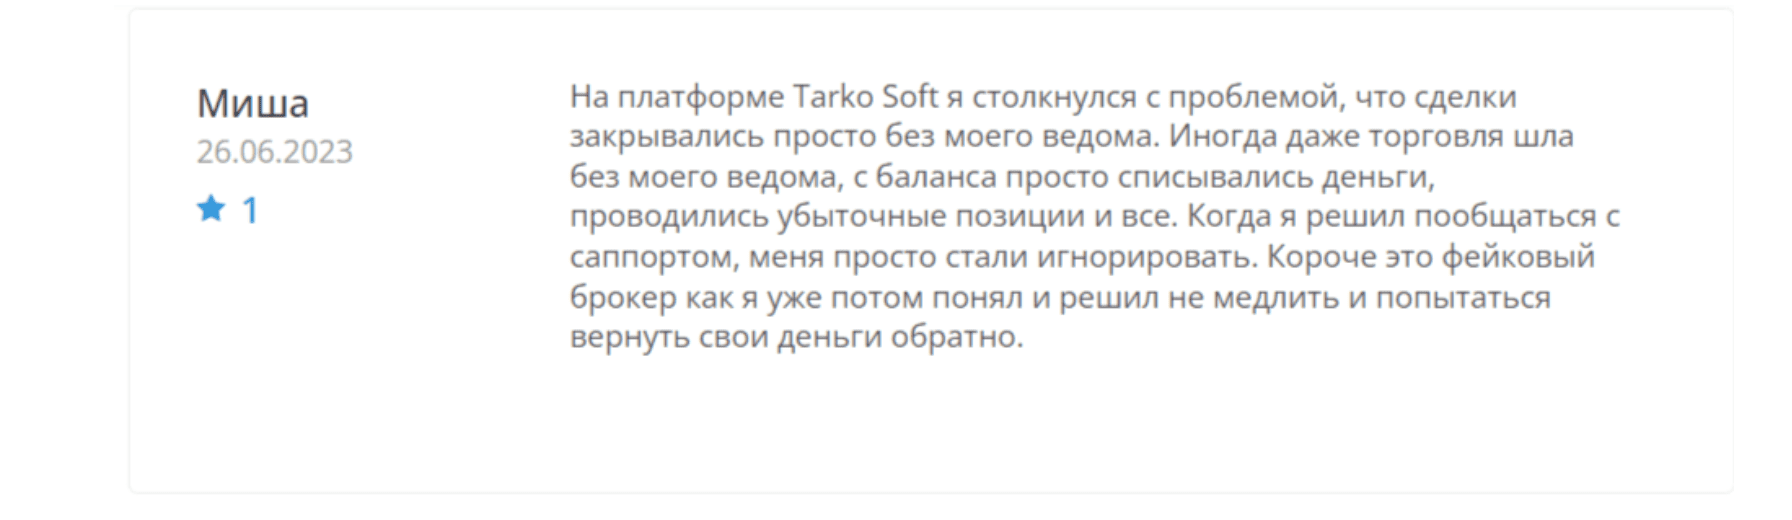 Tarko Soft — брокер-клон, работающий без лицензии